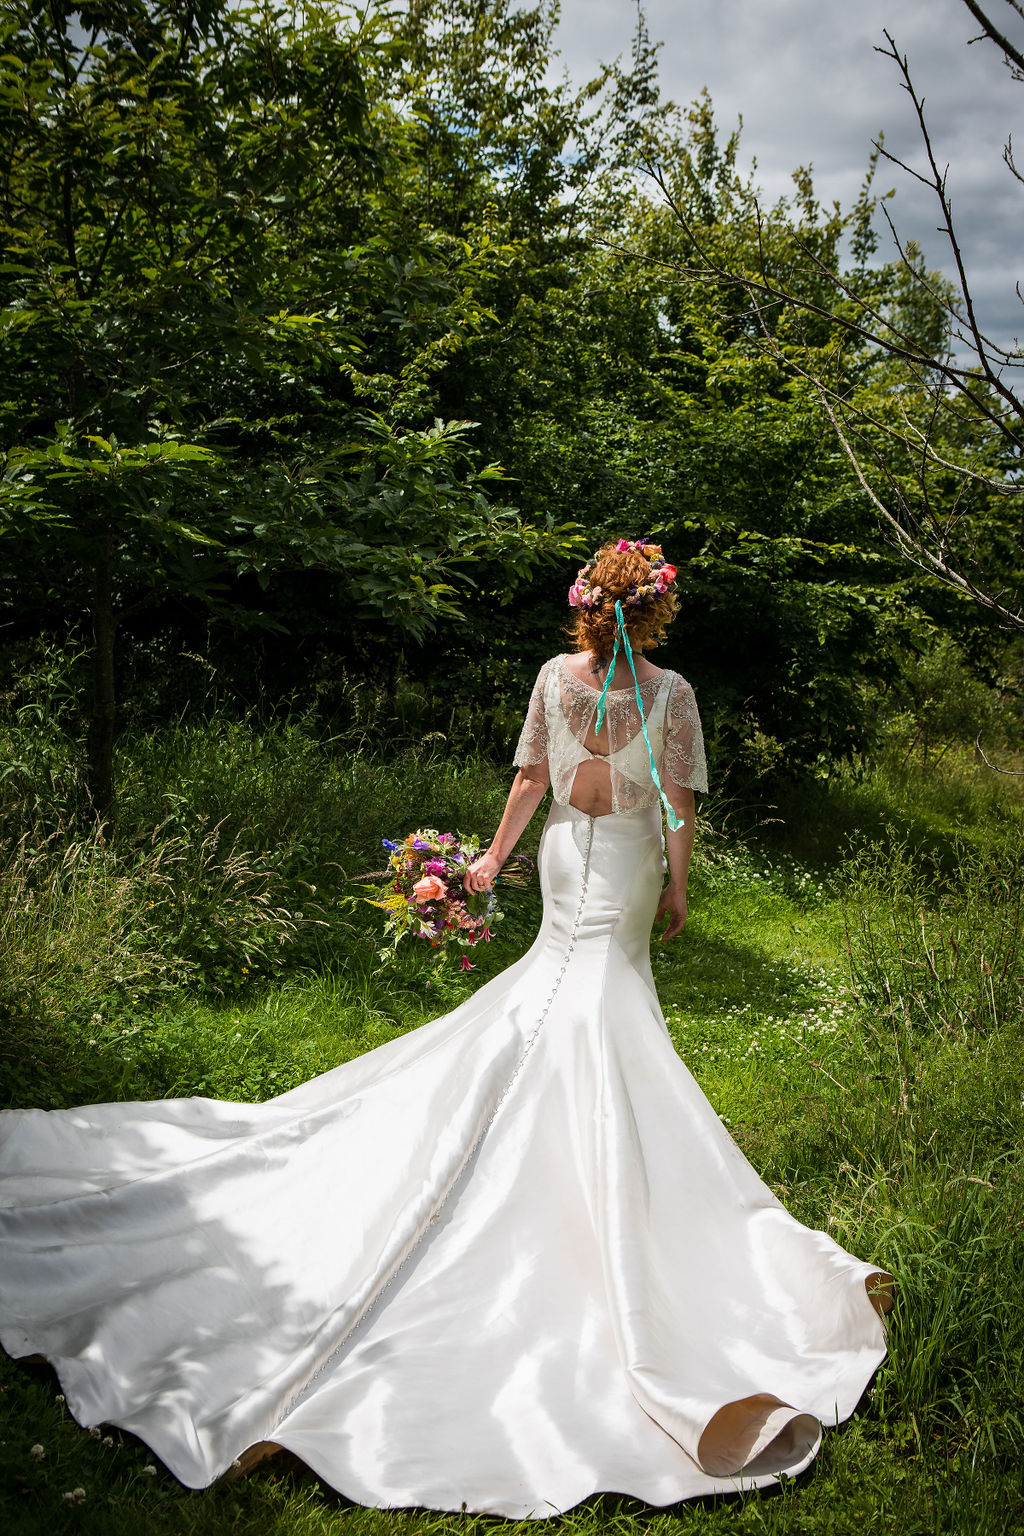 bride with long train in green field - fun boho wedding ideas